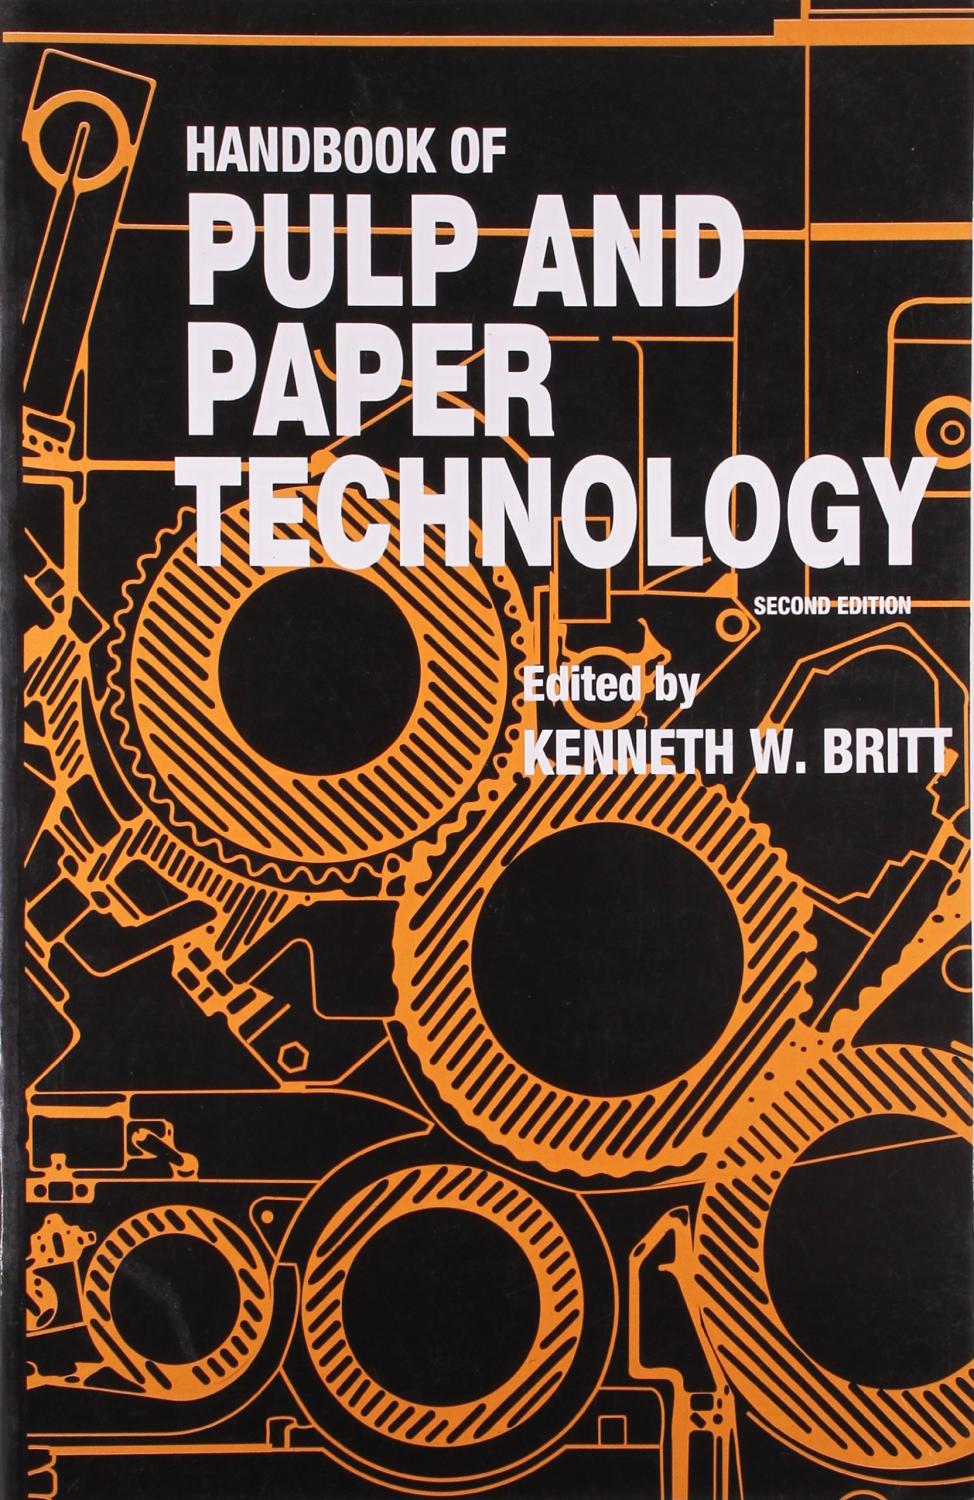 Handbook of Pulp and Paper Technology ( 2nd Edition ) - Kenneth W. Britt